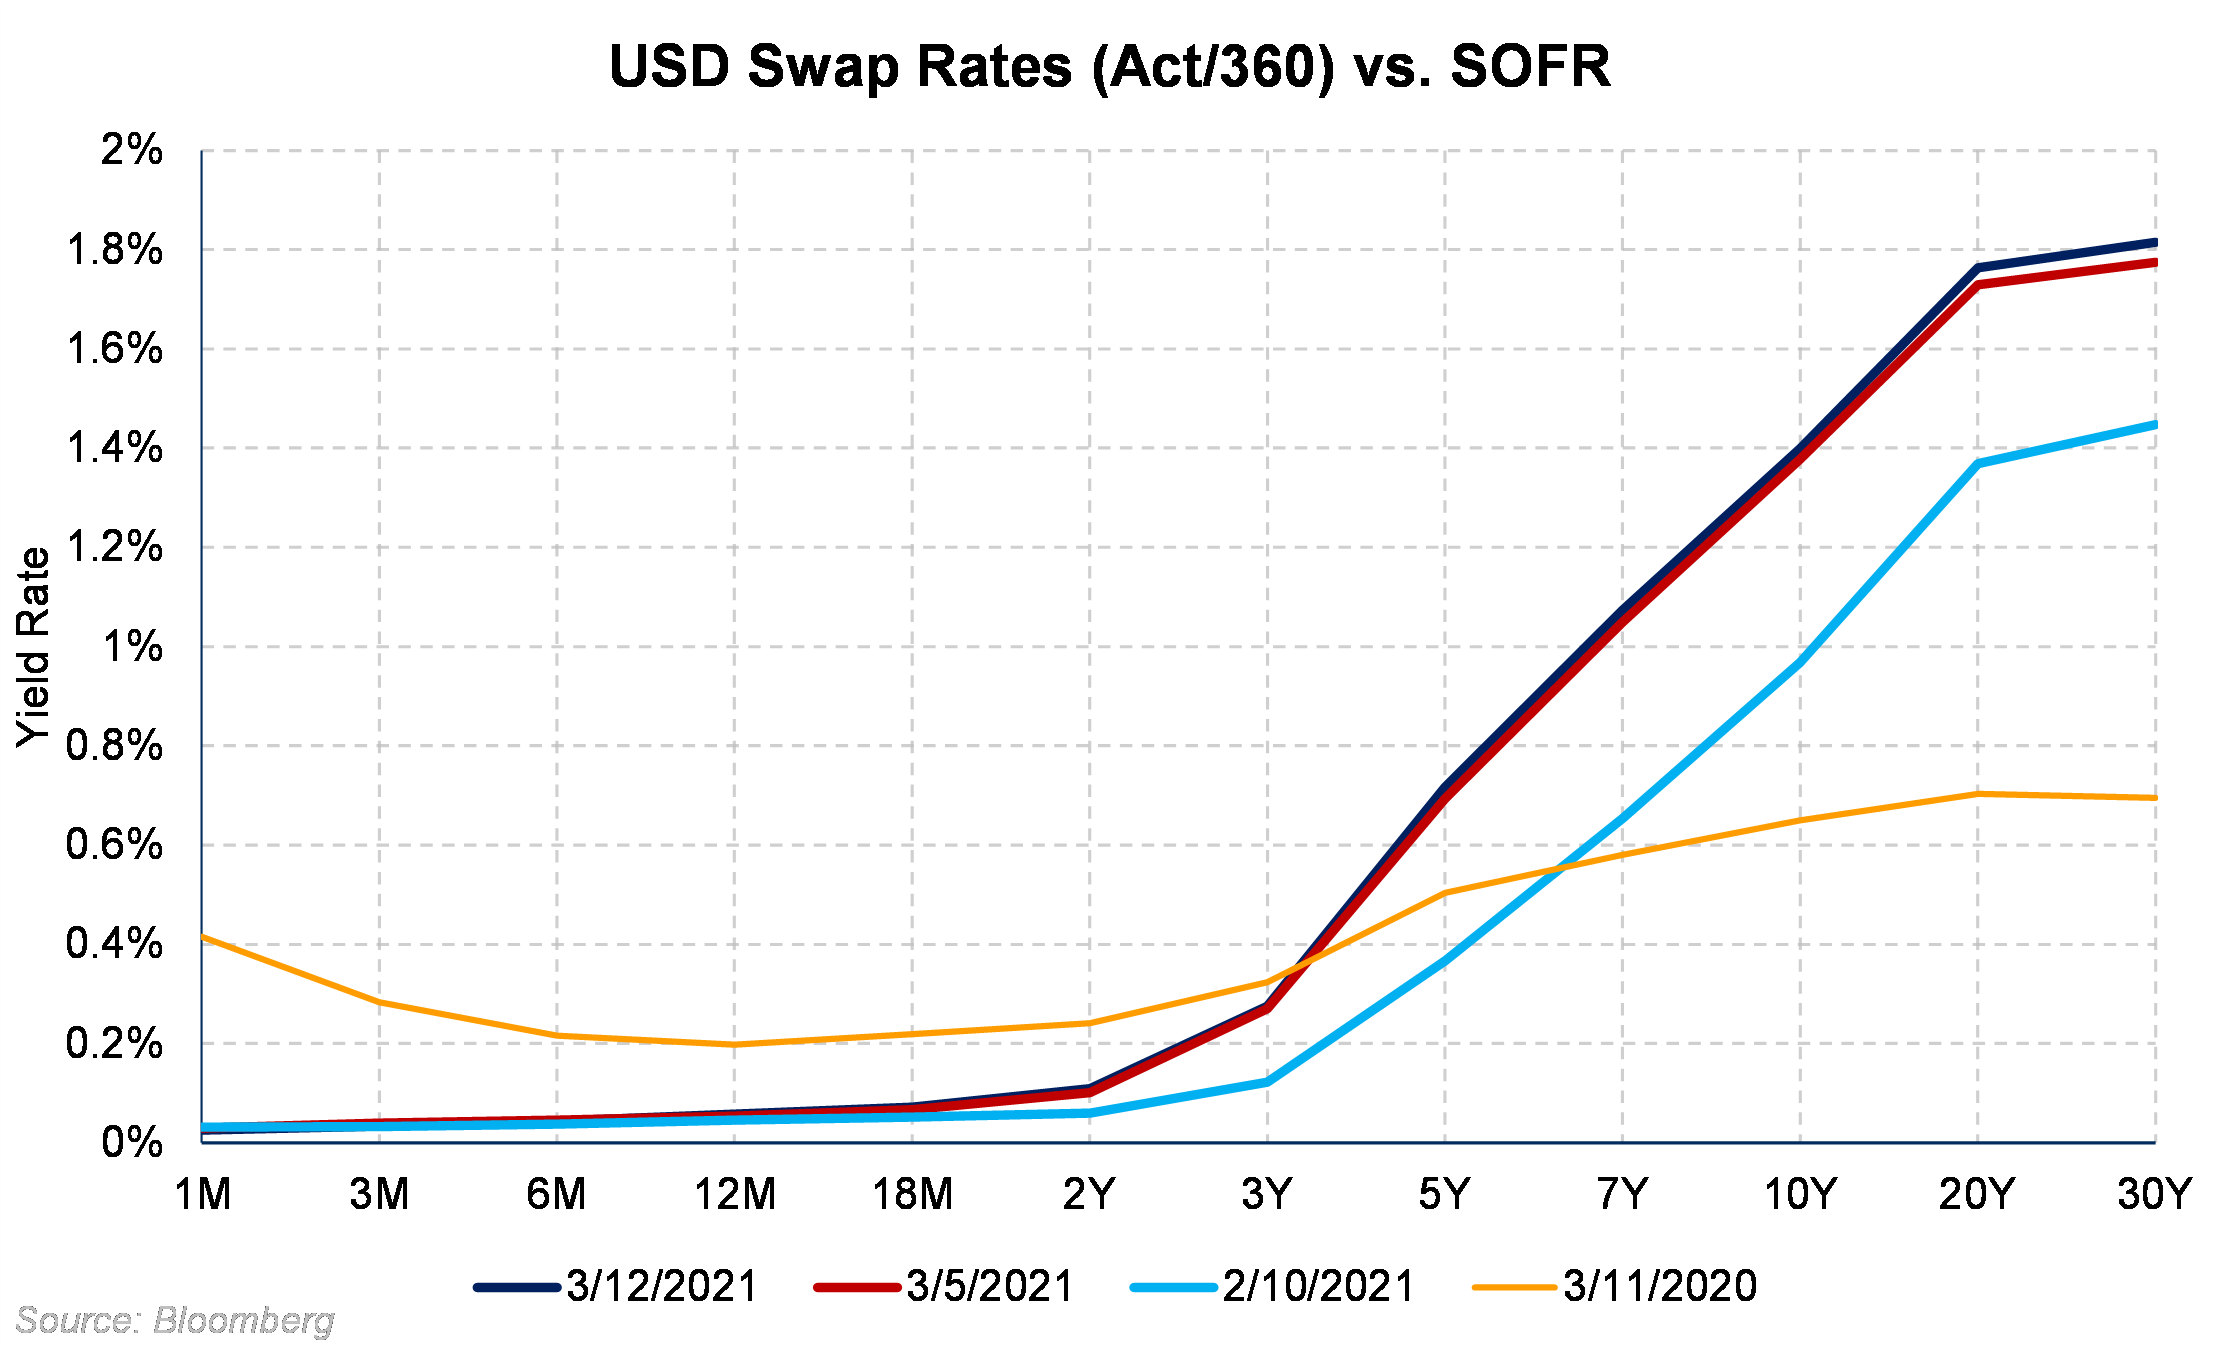 USD Swap Rates vs SOFR